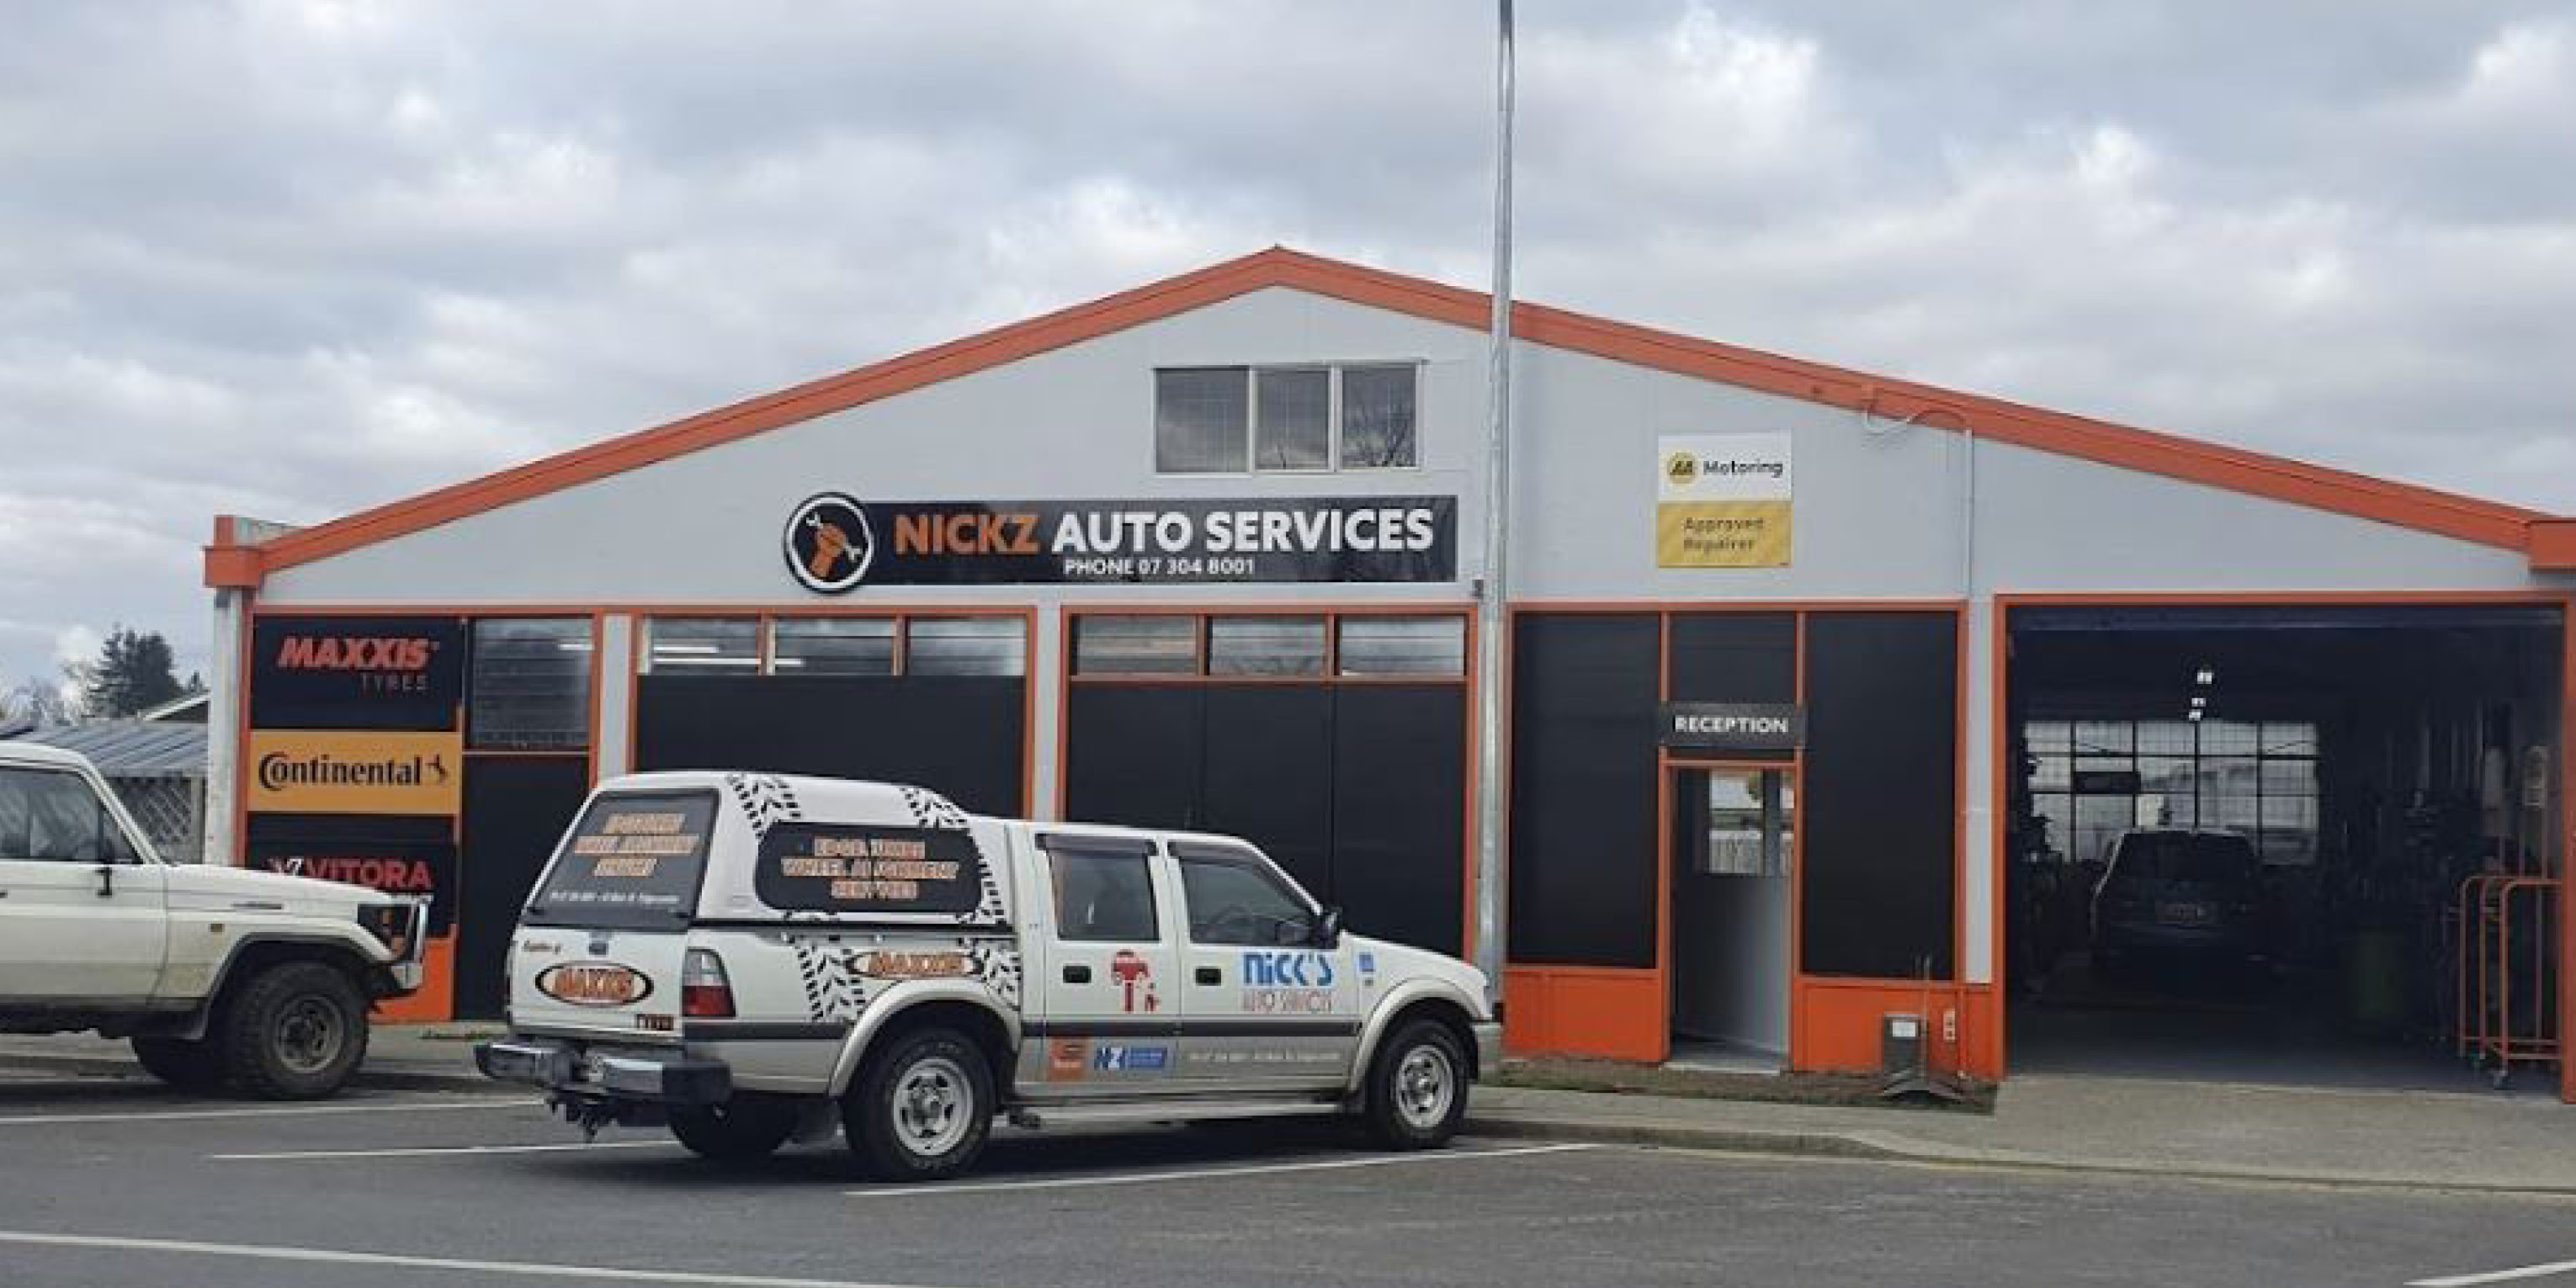 Nickz Auto Services